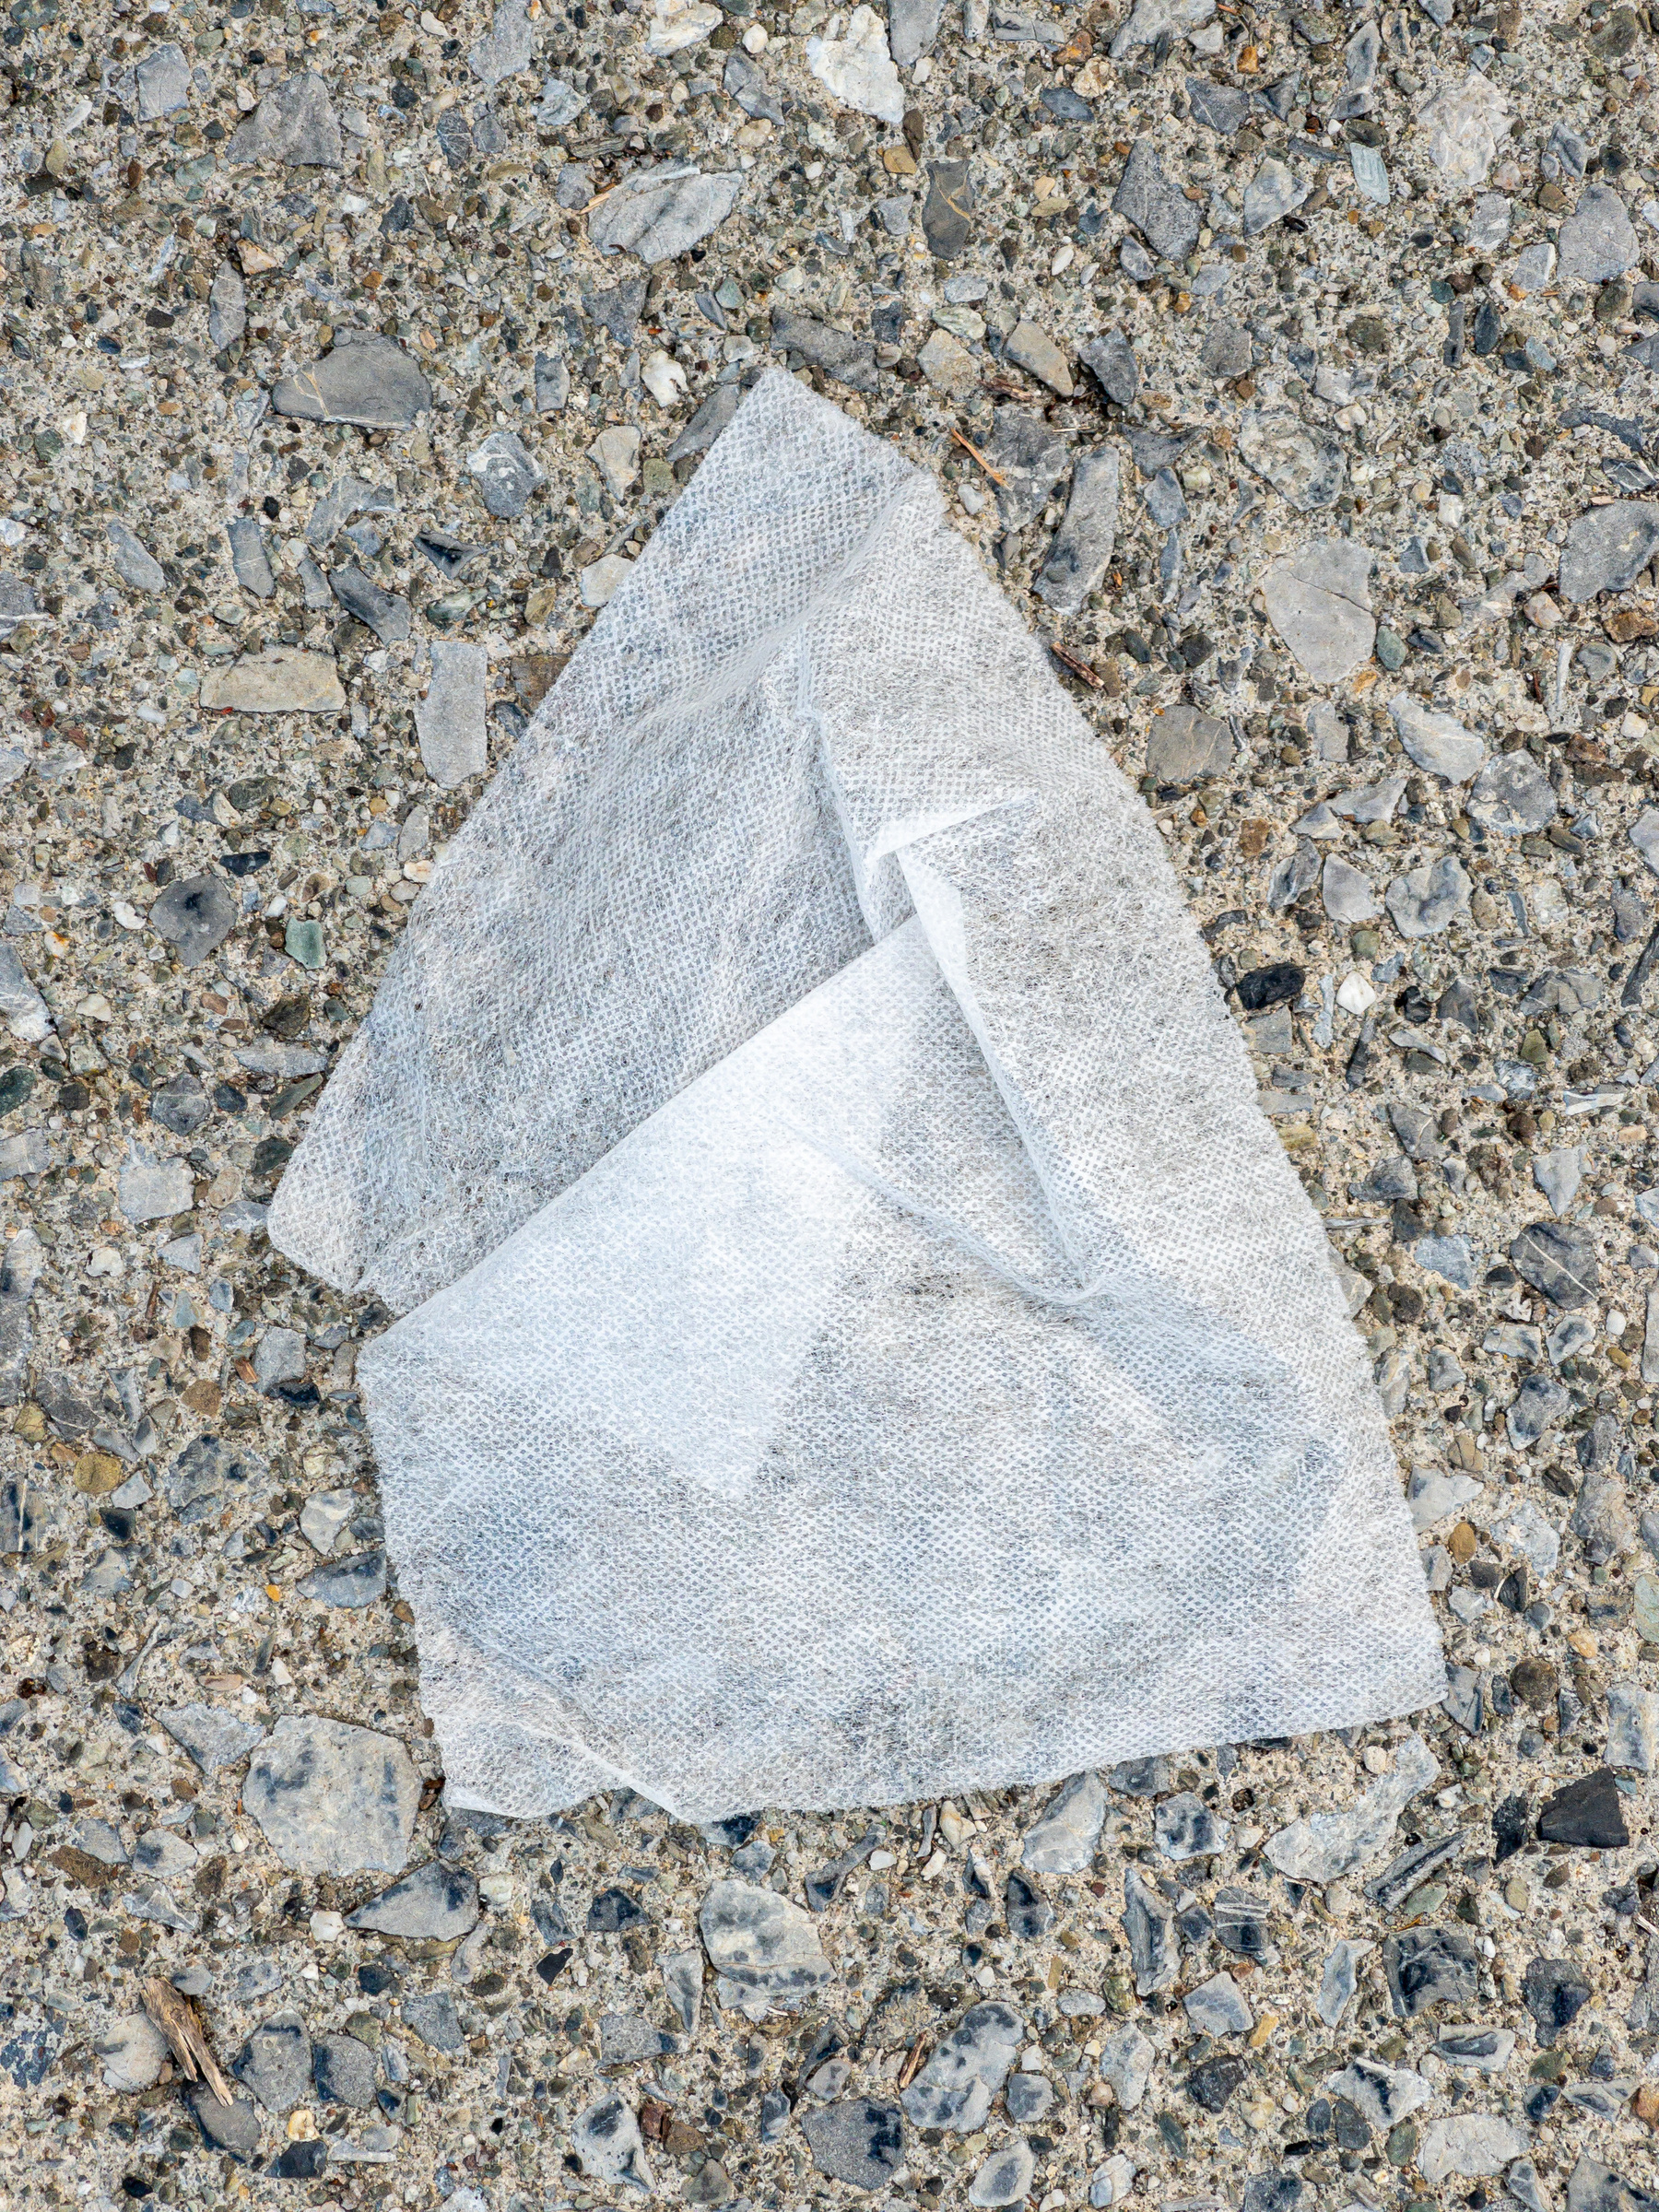 White paper detritus on the sidewalk crumpled in an interesting shape.